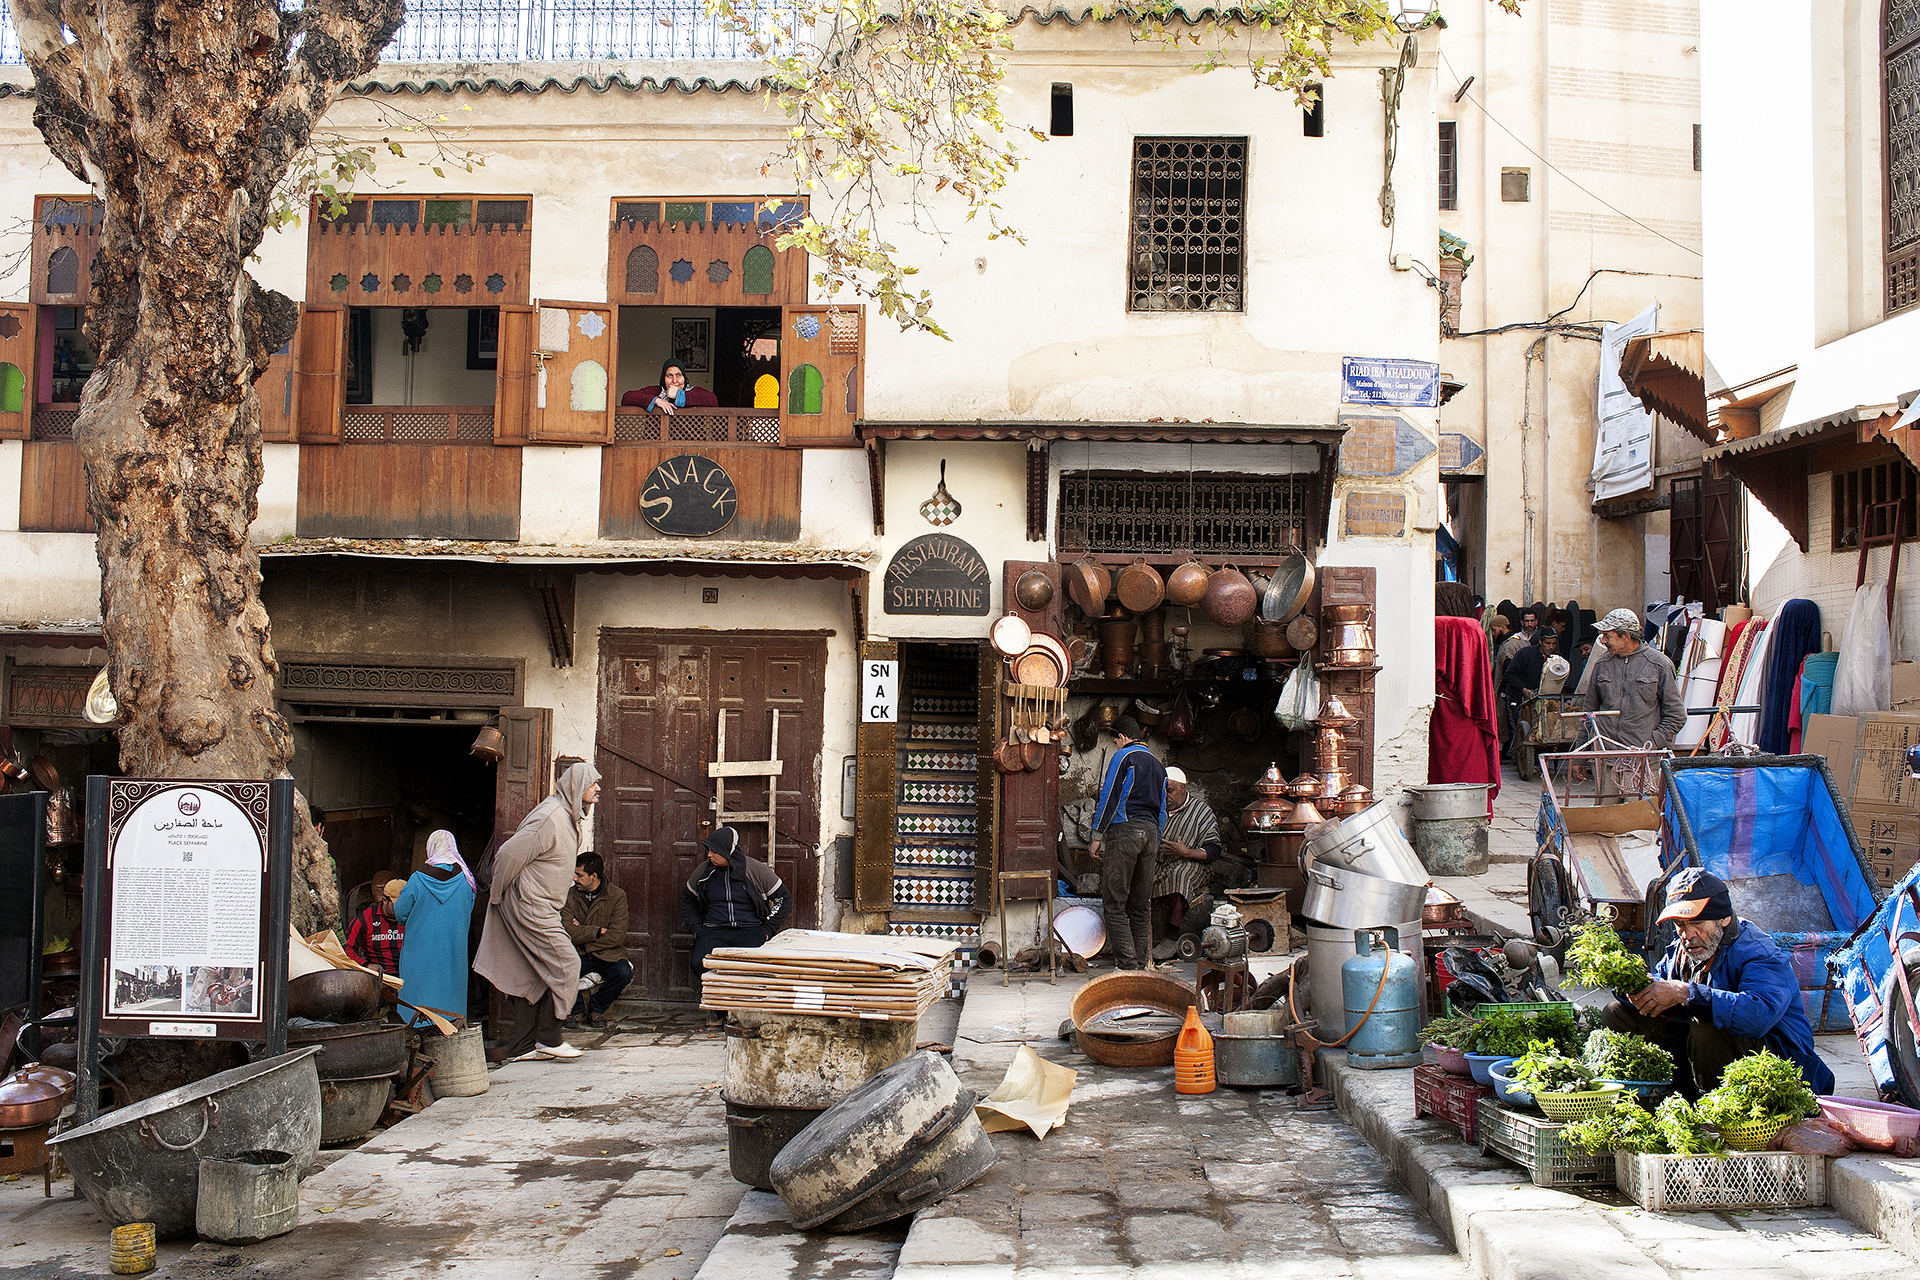 Travel Diary: Morocco by Michela Biagini